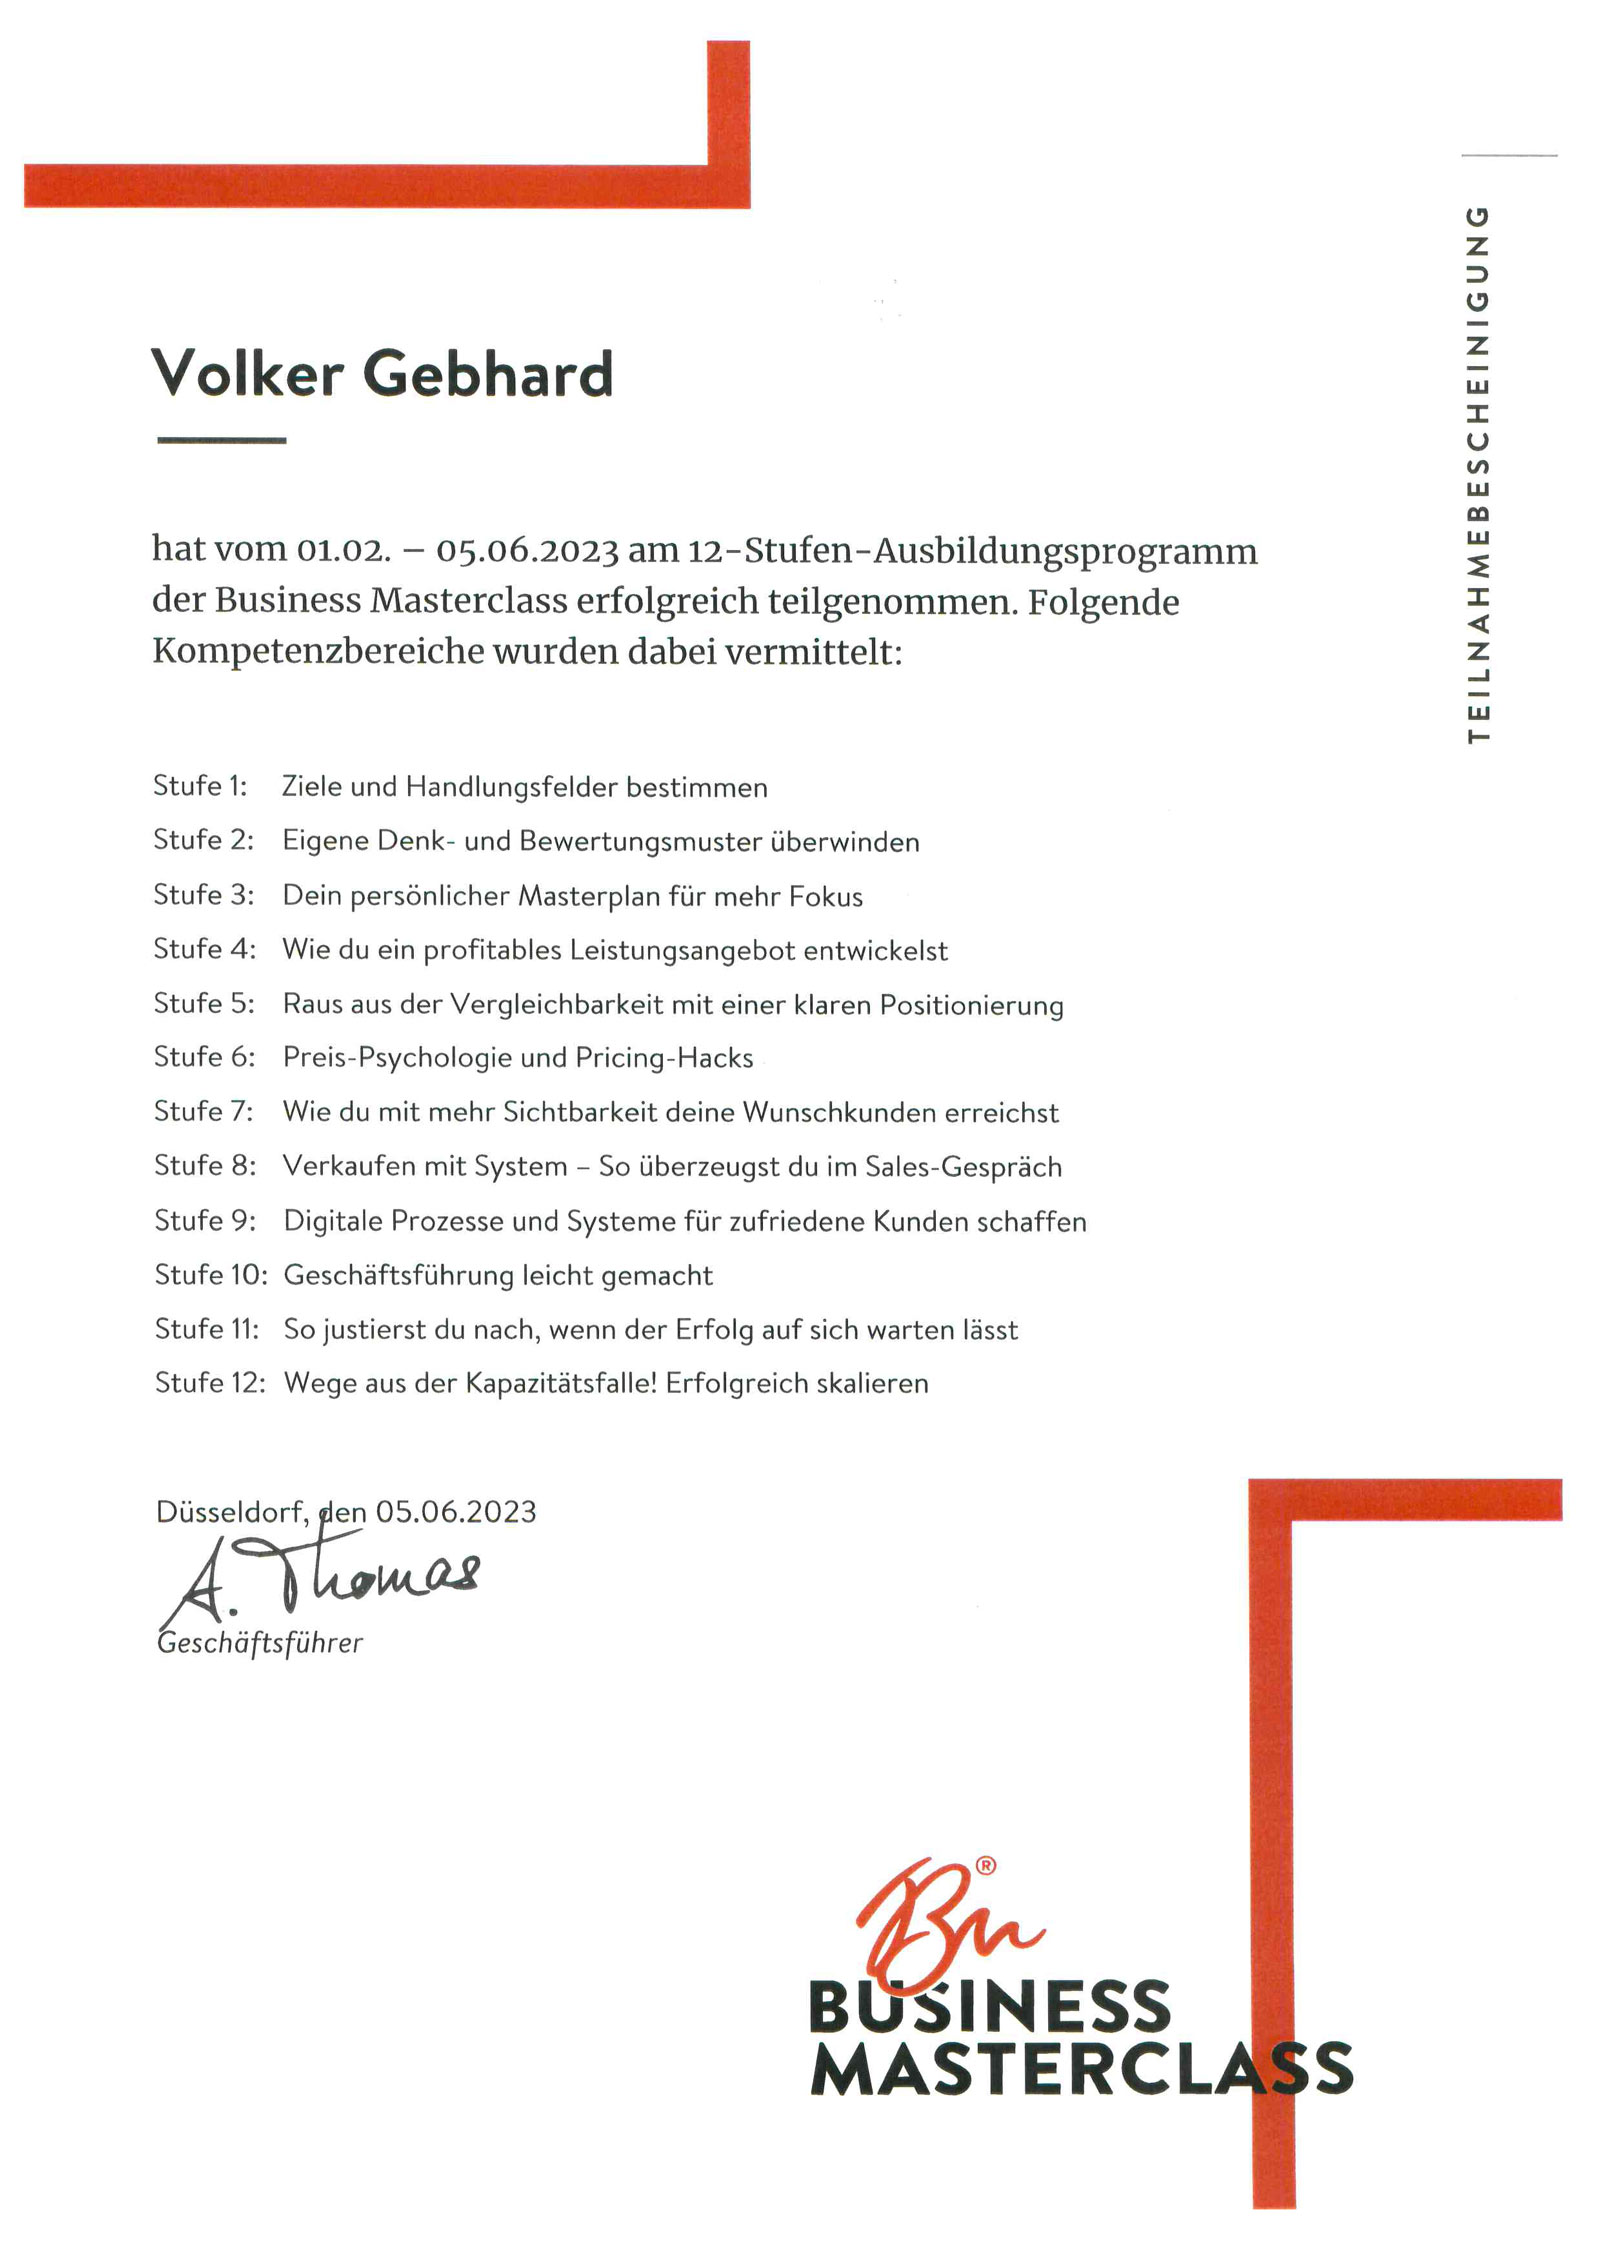 Volker Gebhard, Coaching, Consulting, Beratung, Mediation, Bewerbung, Training, Gesundheitsmanagement, Konflikt